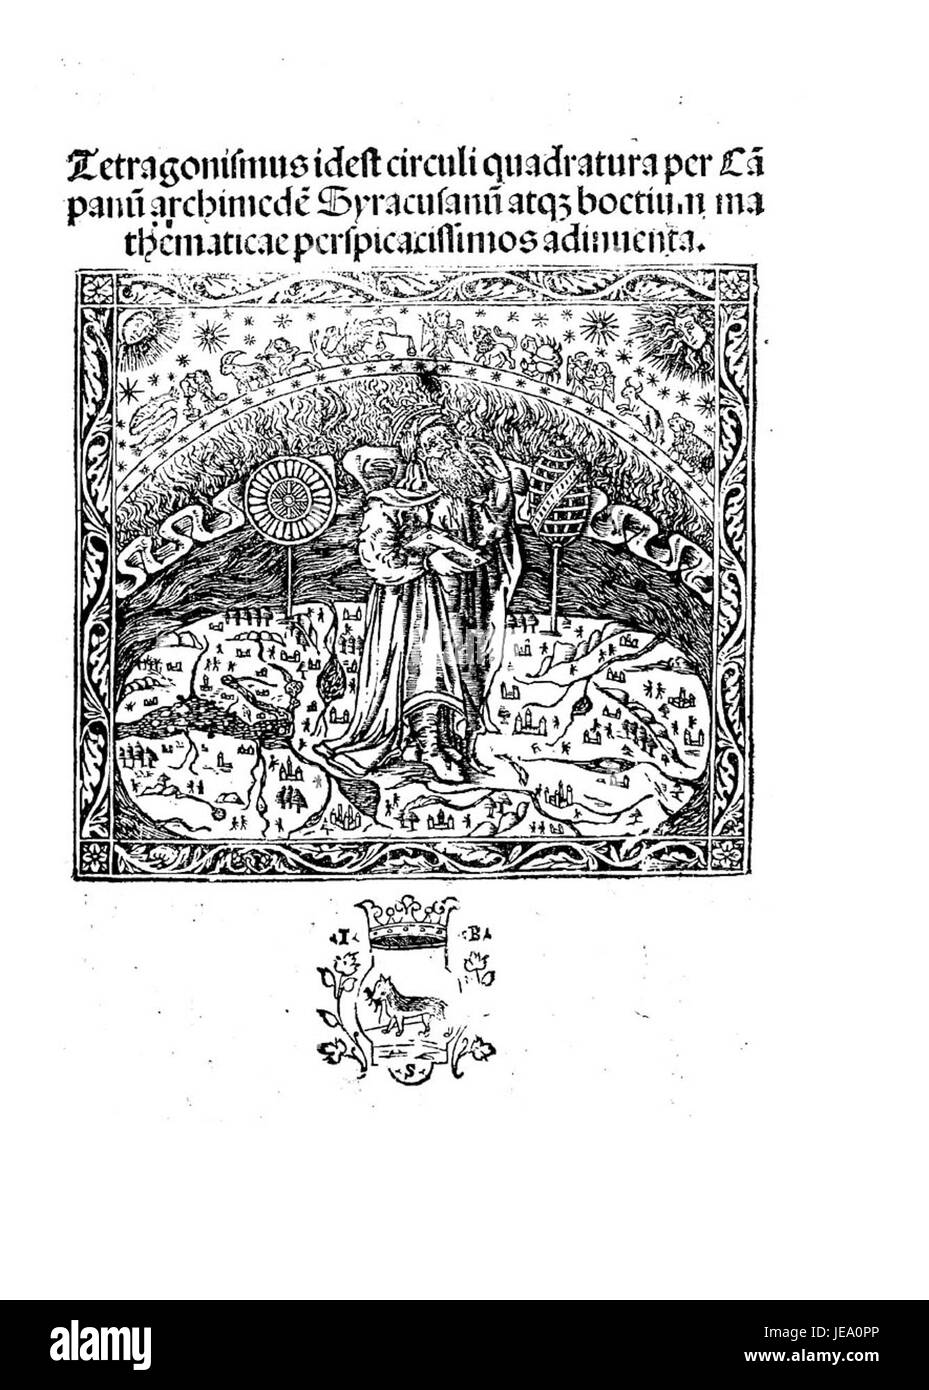 Campano - Tetragonismus idest circuli quadratura, 1503 - 106319 Stock Photo